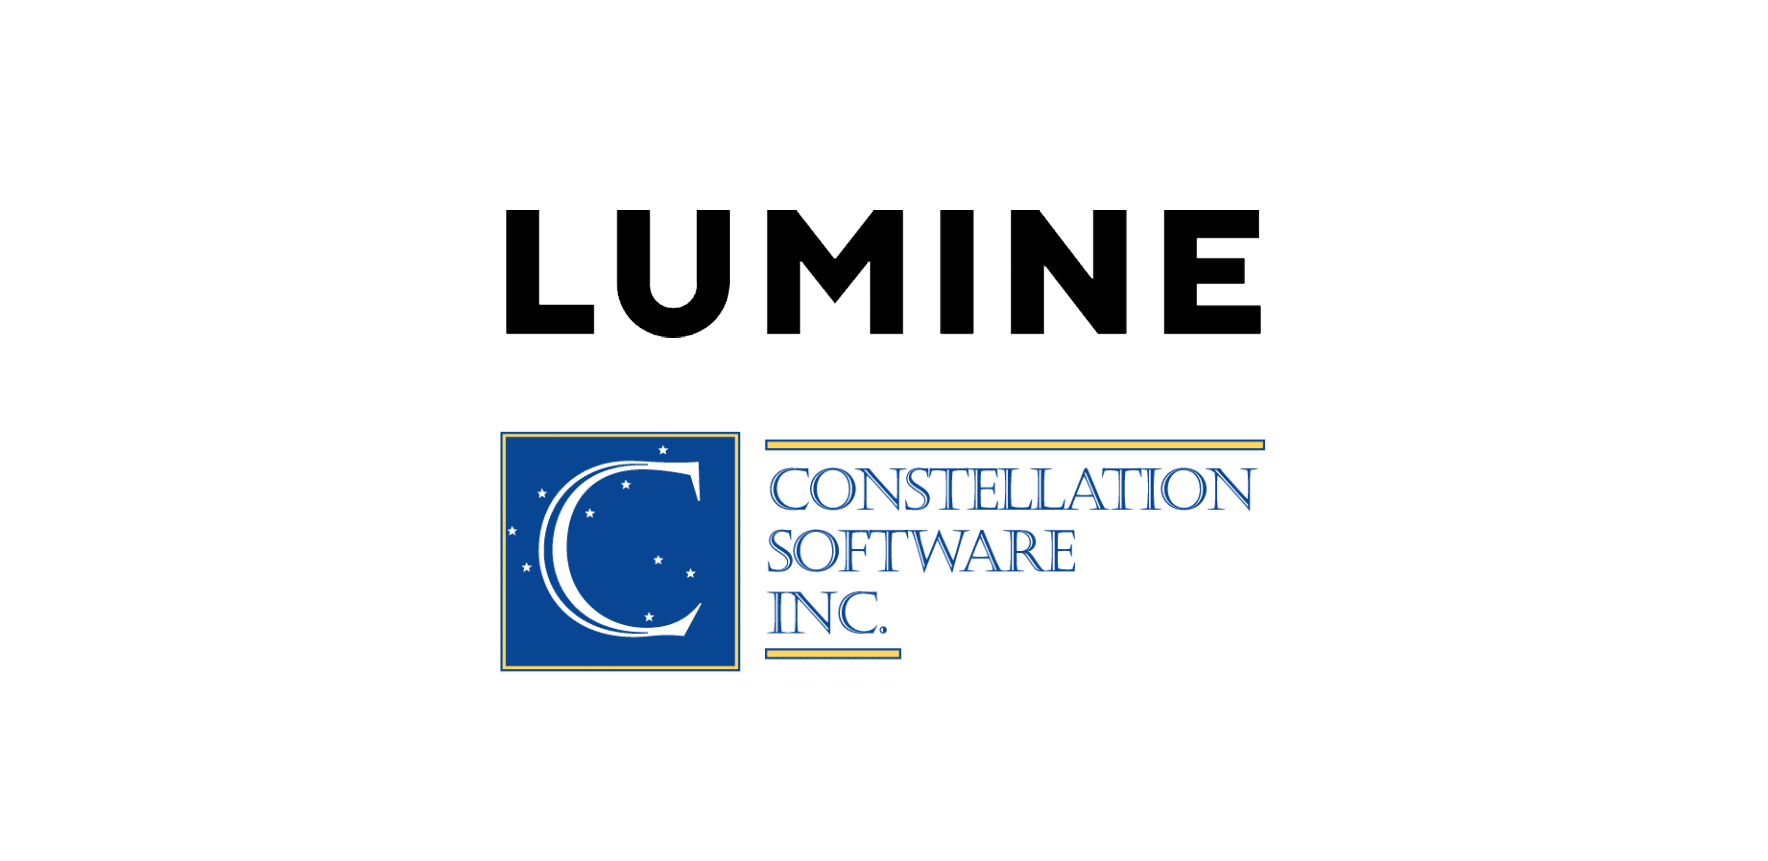 lumine-and-consellation-logos-2